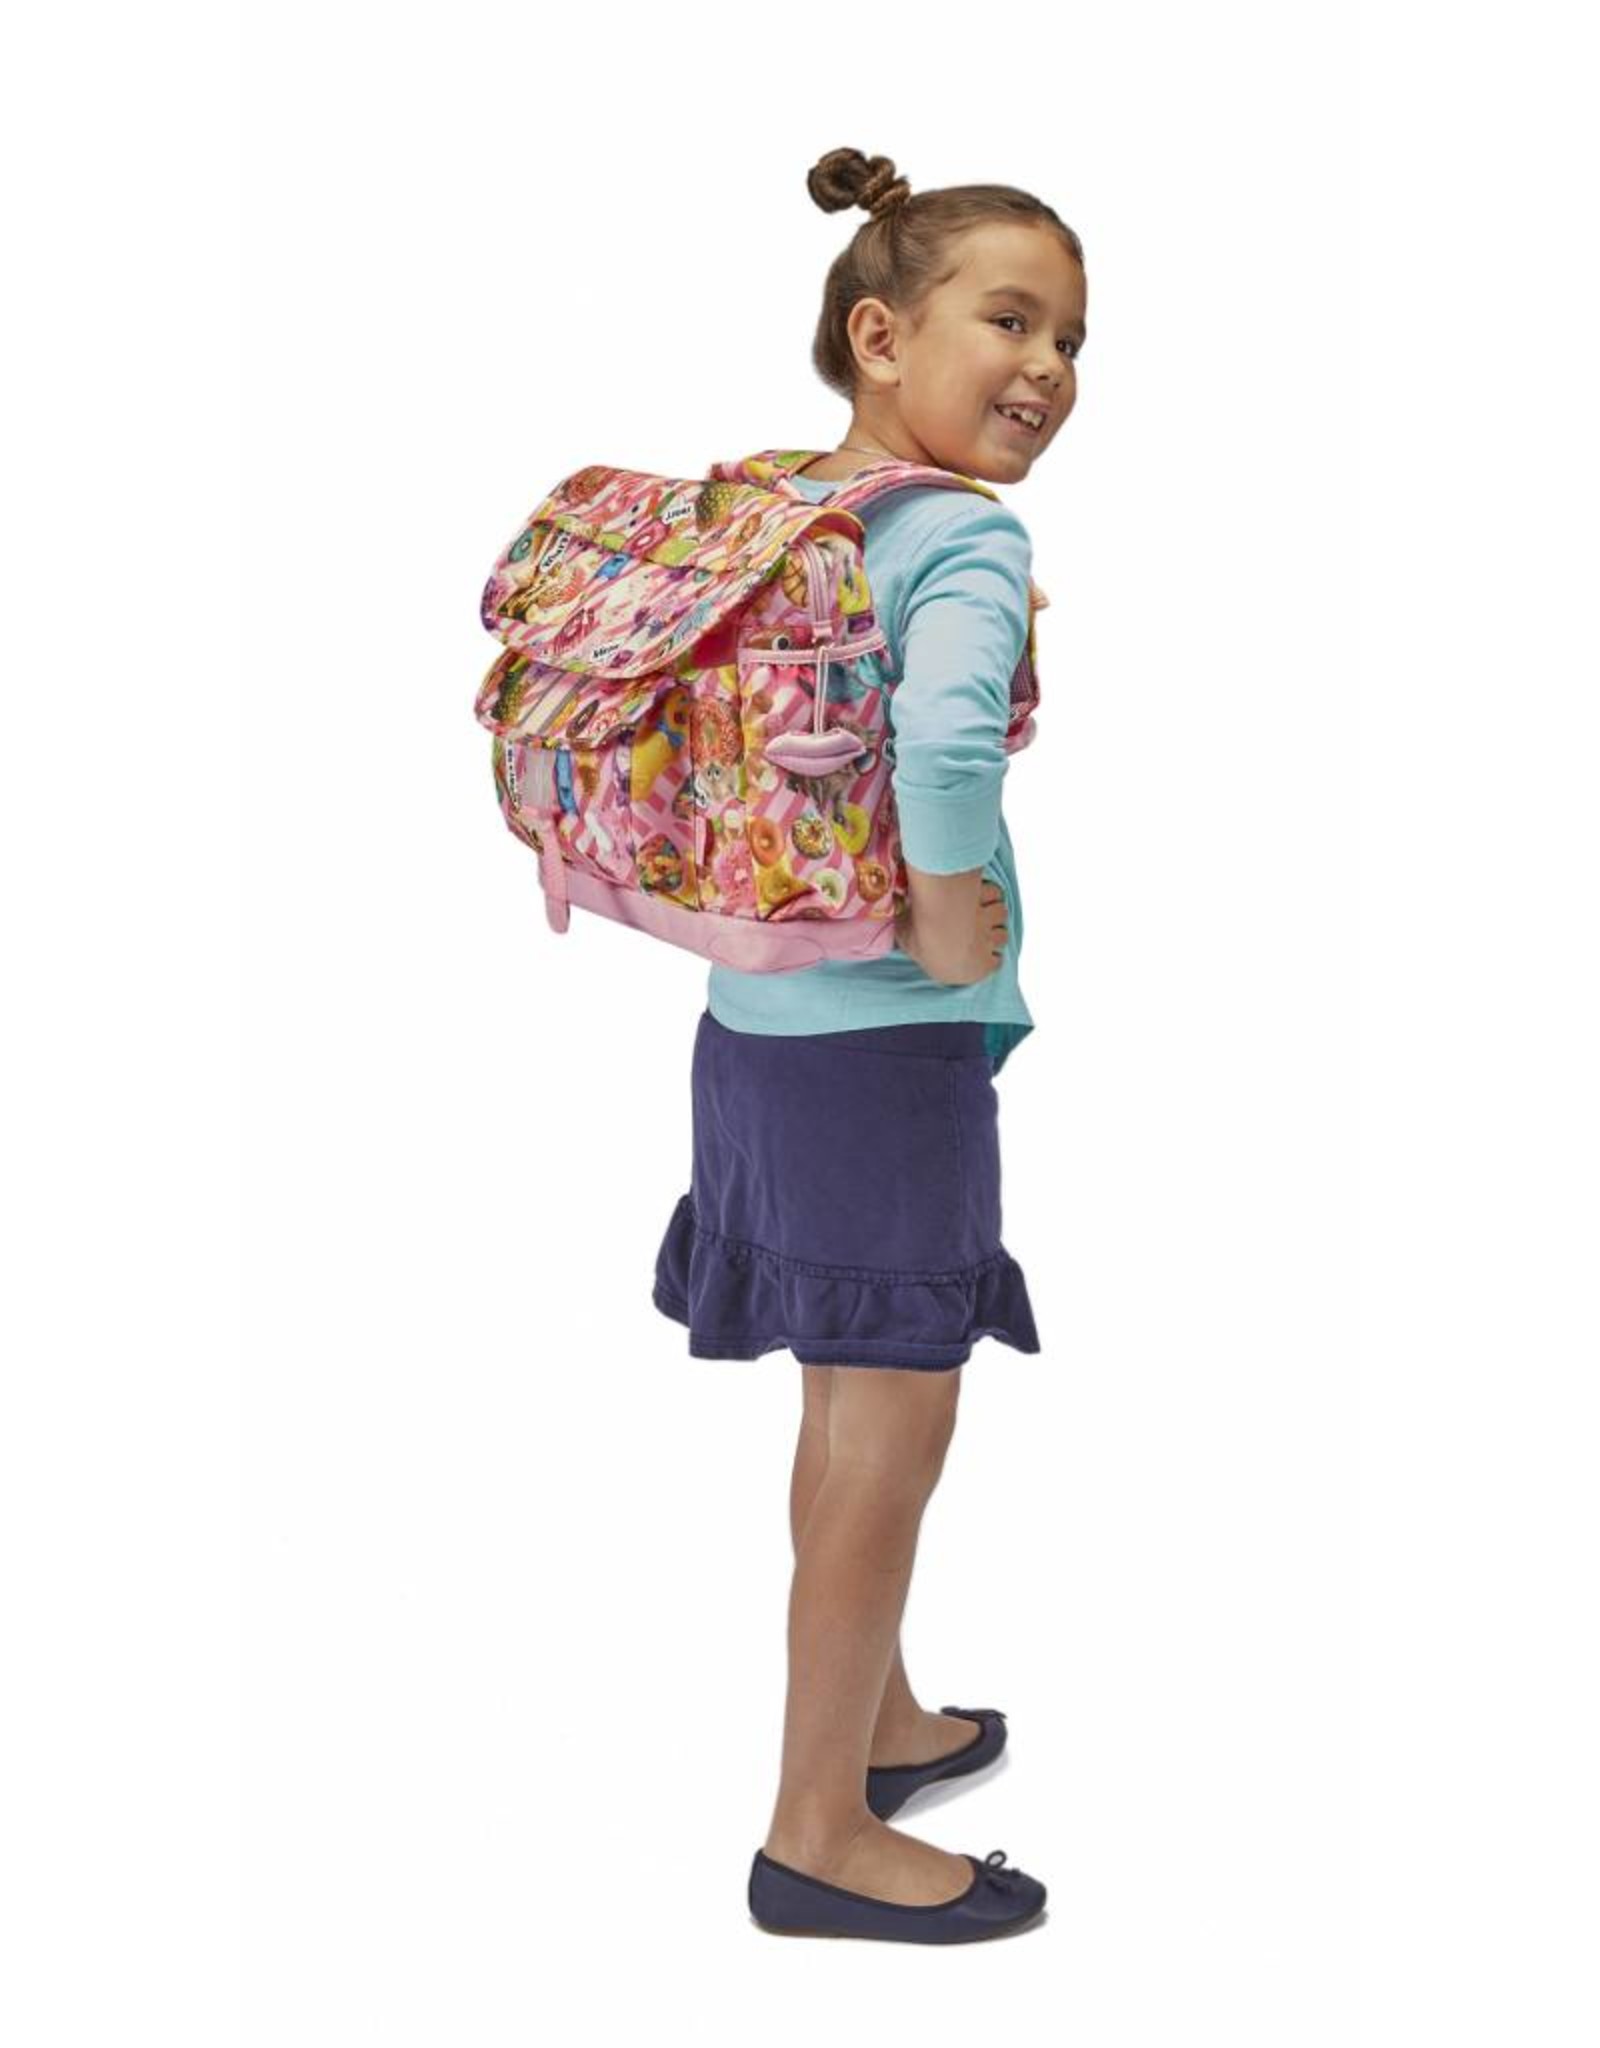 Bixbee Funtastical Backpack (Large)